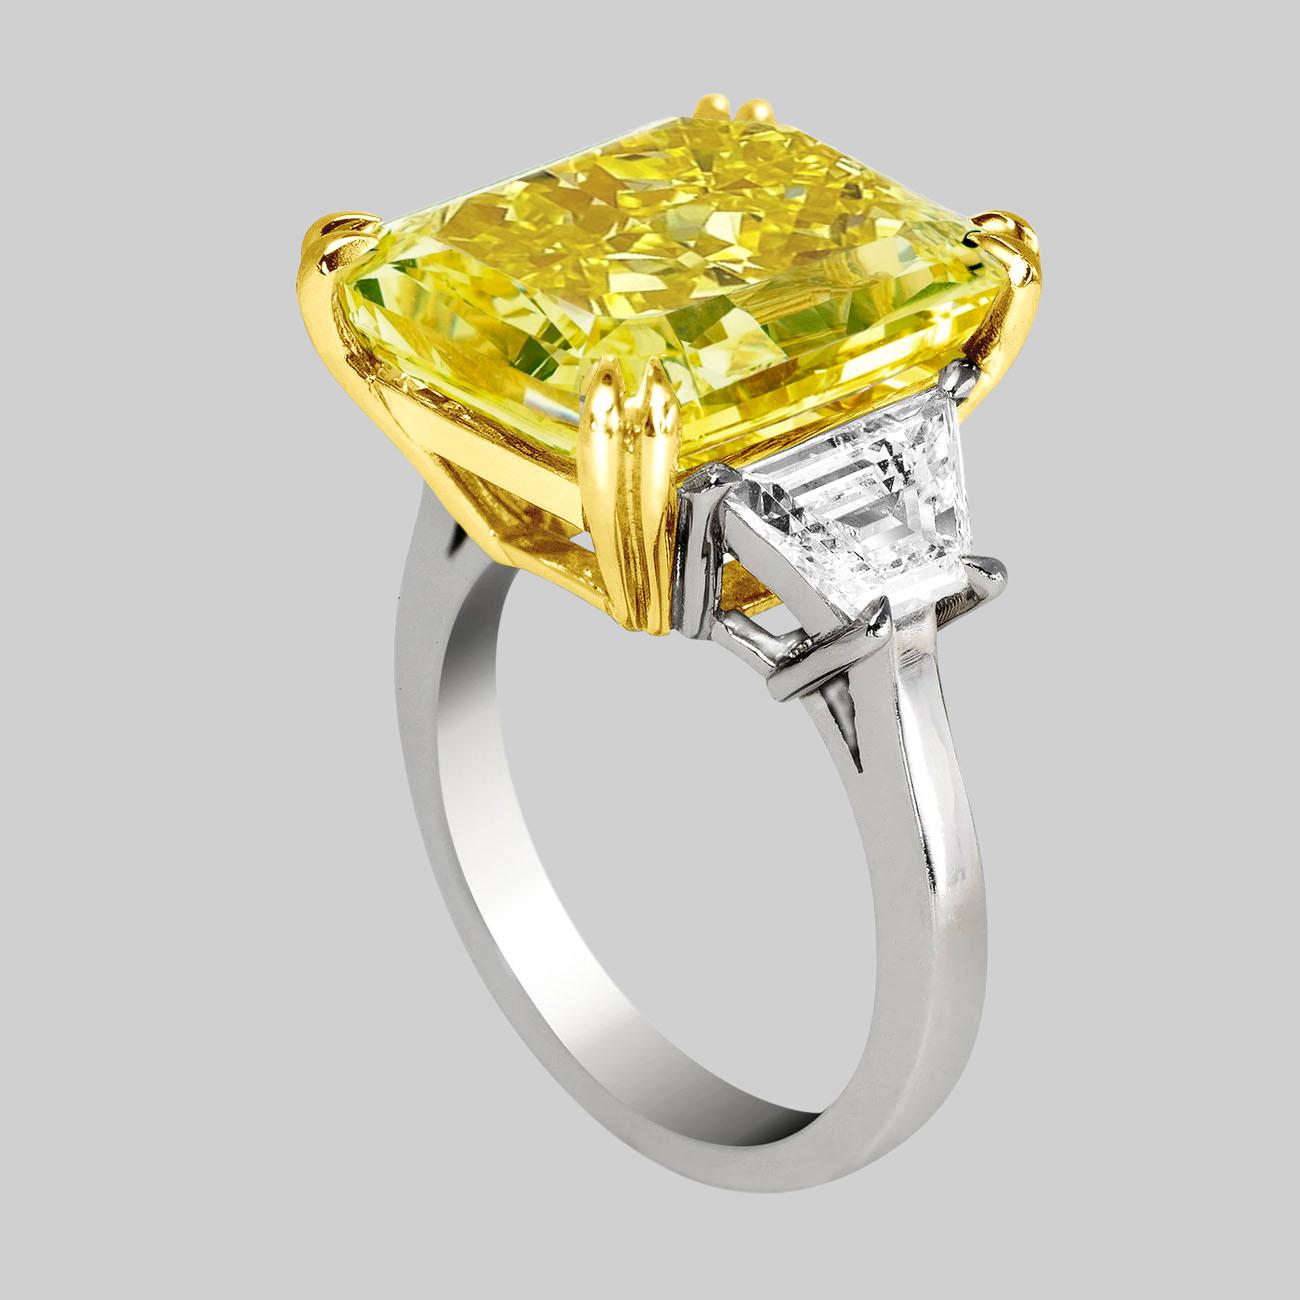 Oval Cut GIA Certified Fancy Yellow 10.80 Carat Cushion Cut Diamond Ring For Sale